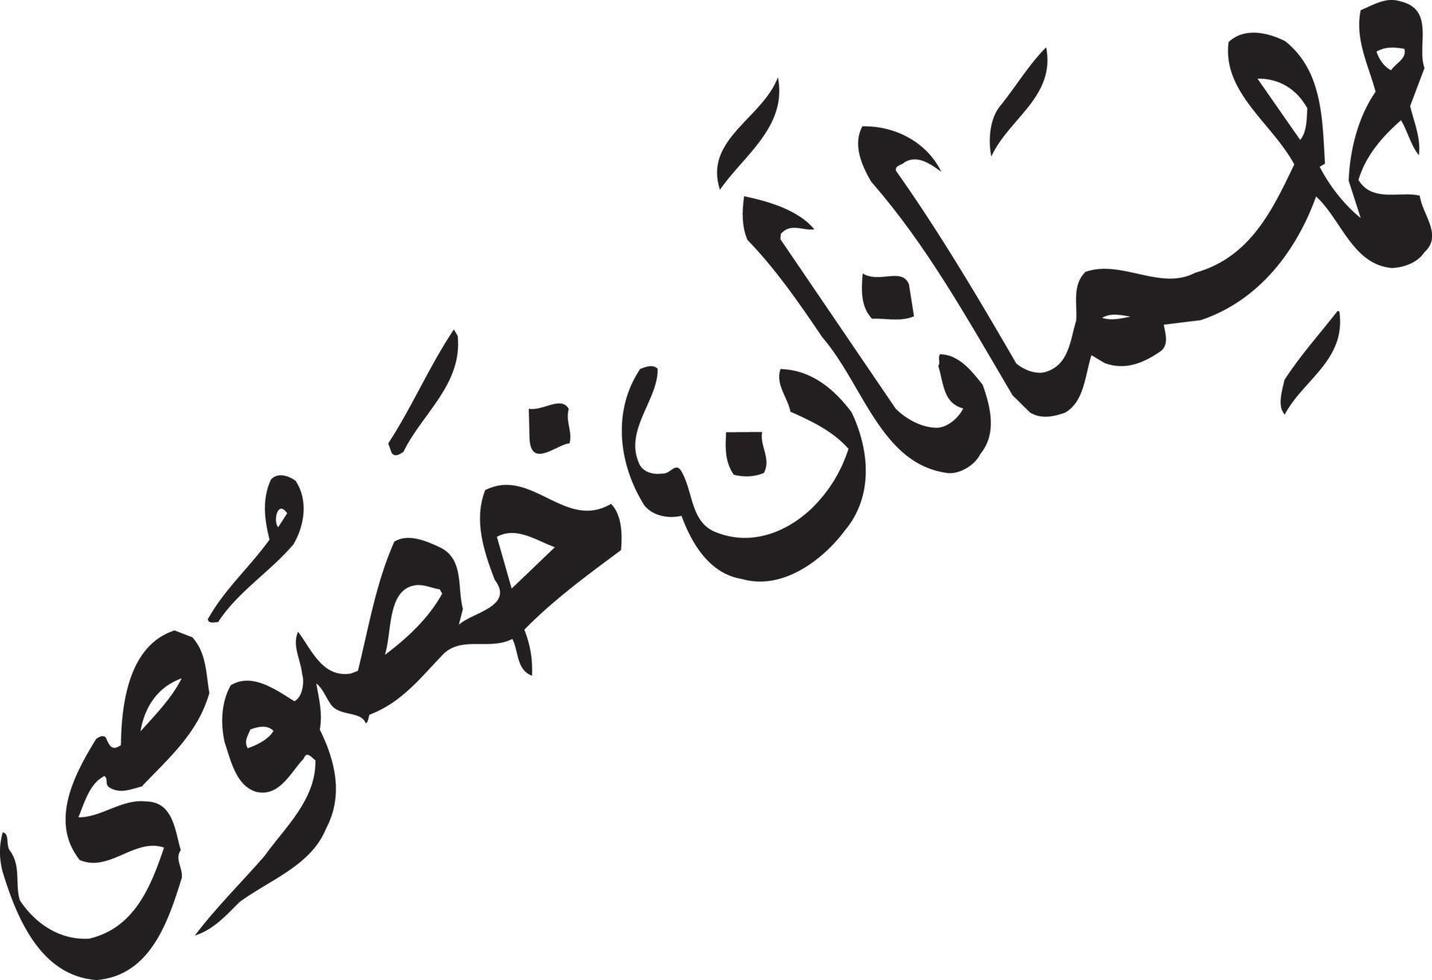 mhamanan khasosi título caligrafia urdu islâmica vetor livre